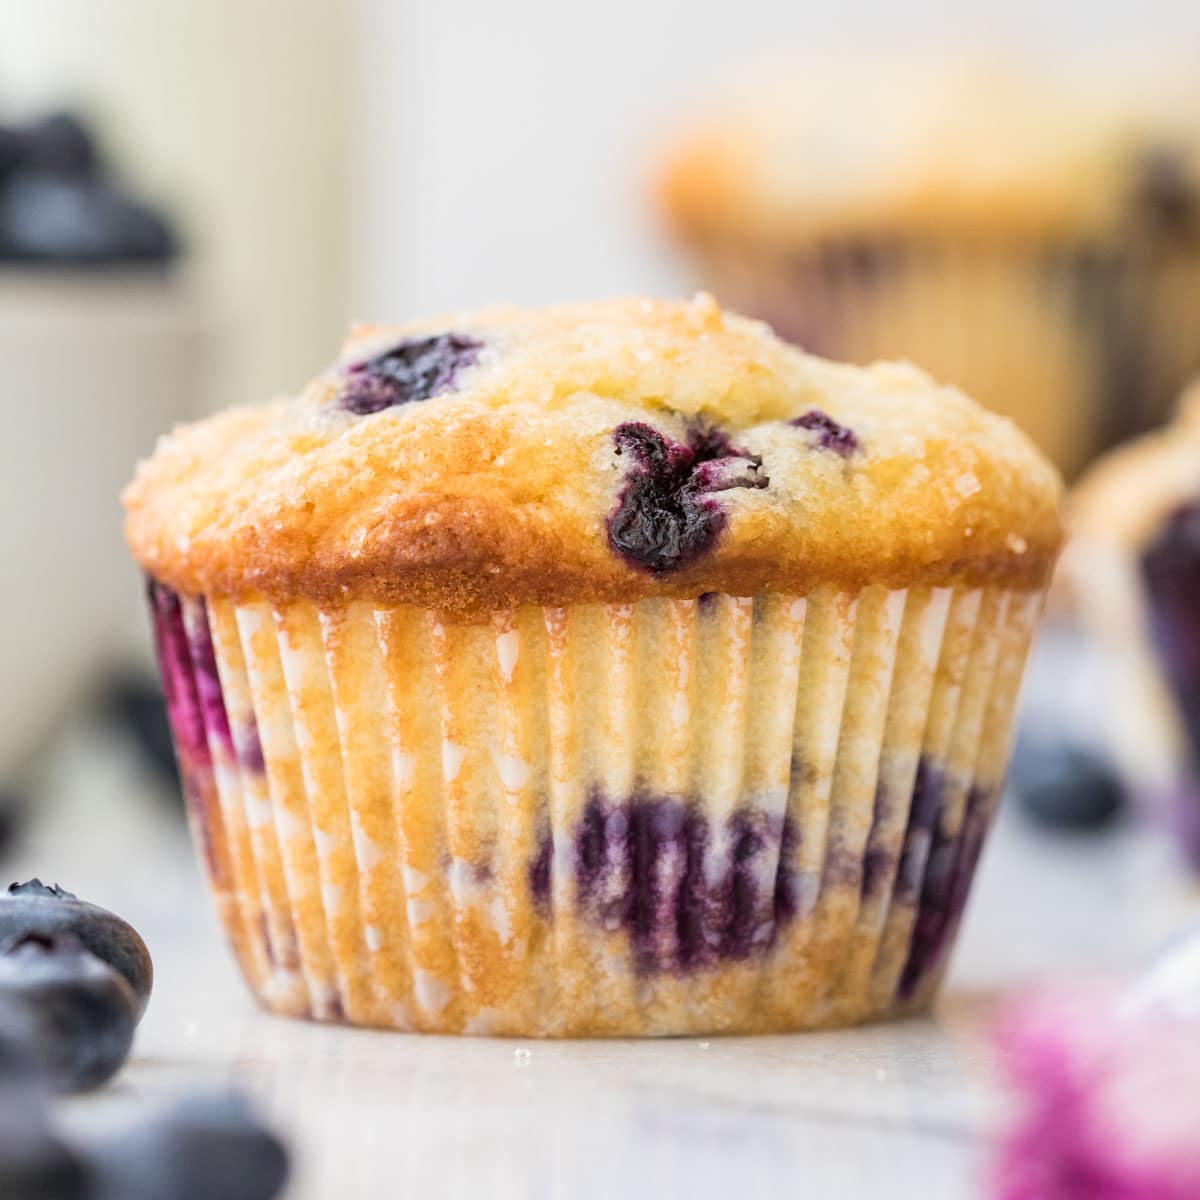 https://sugarspunrun.com/wp-content/uploads/2021/05/Best-Blueberry-Muffins-Recipe-1-of-1.jpg